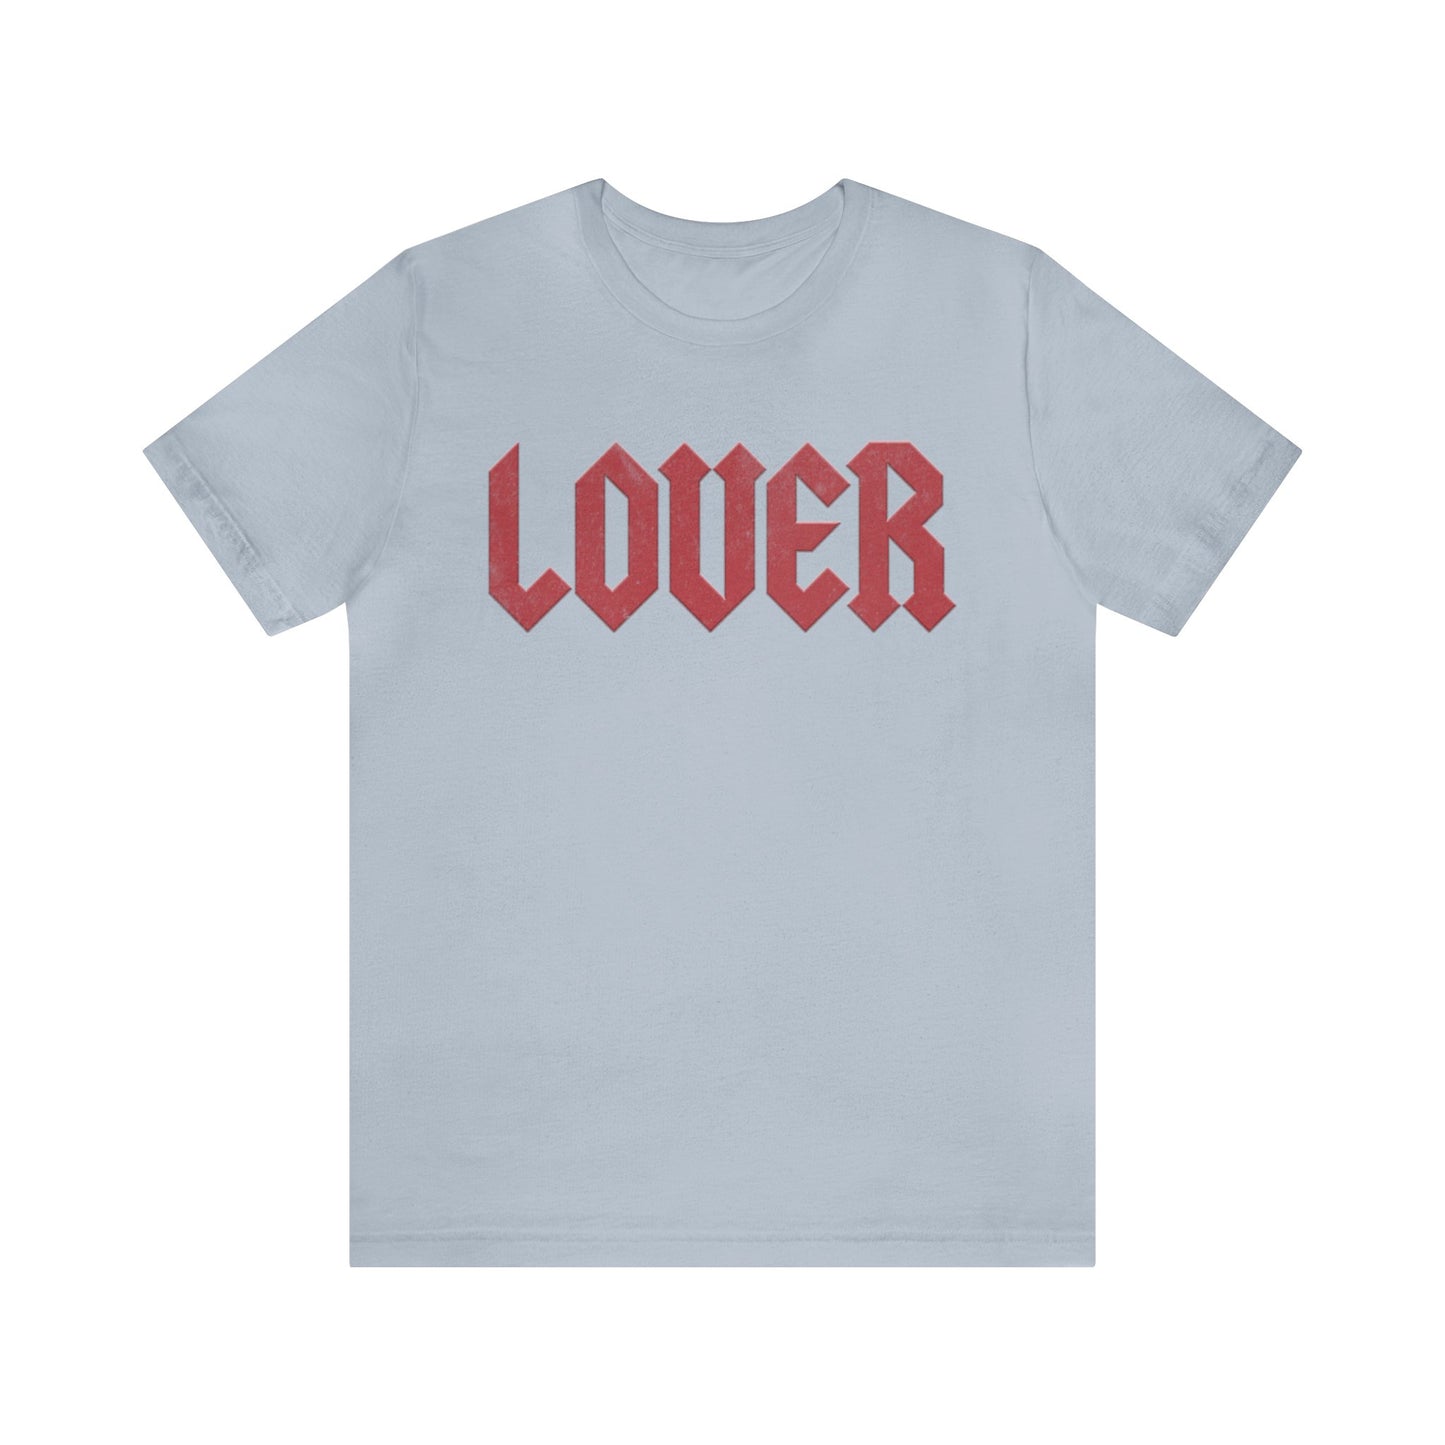 Retro Lover Shirt, In My Valentine Era Shirt, Happy Valentine's Day Shirt, Gift for Girlfriend, Valentine Gift for Wife, Couple Shirt, T1309